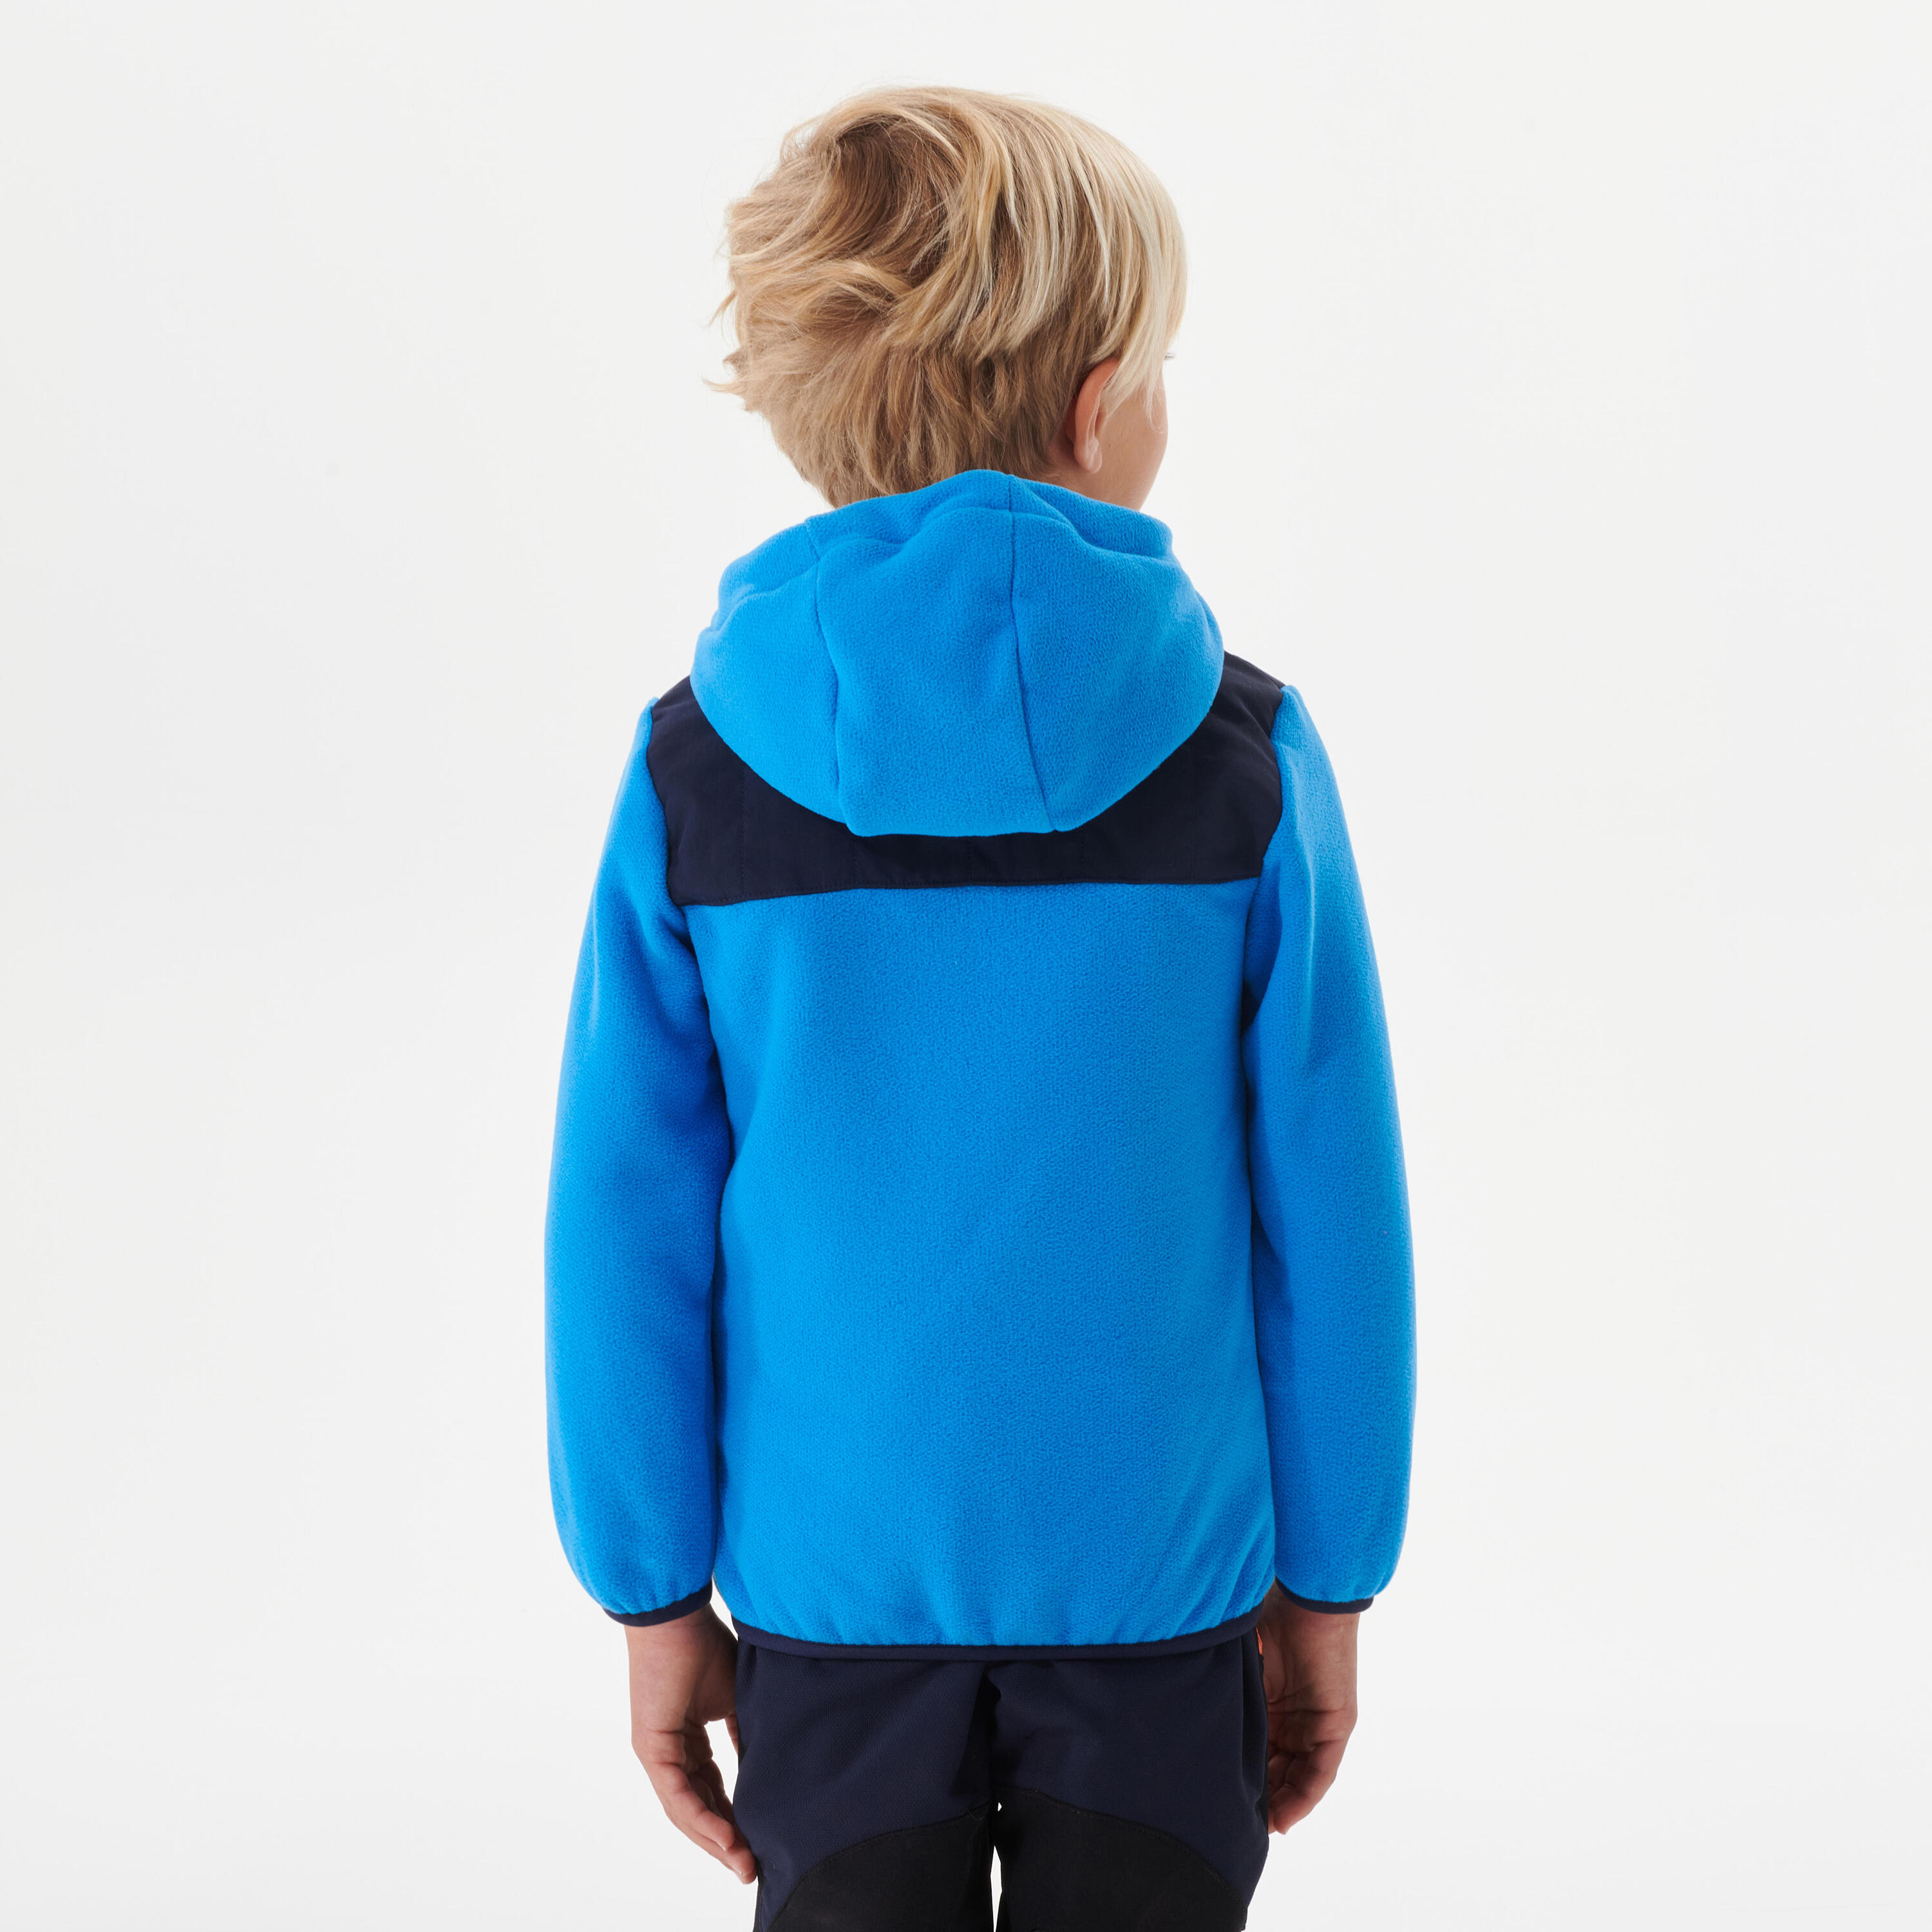 Kids’ Warm Hiking Fleece Jacket - MH500 Aged 2-6 - Blue 3/8